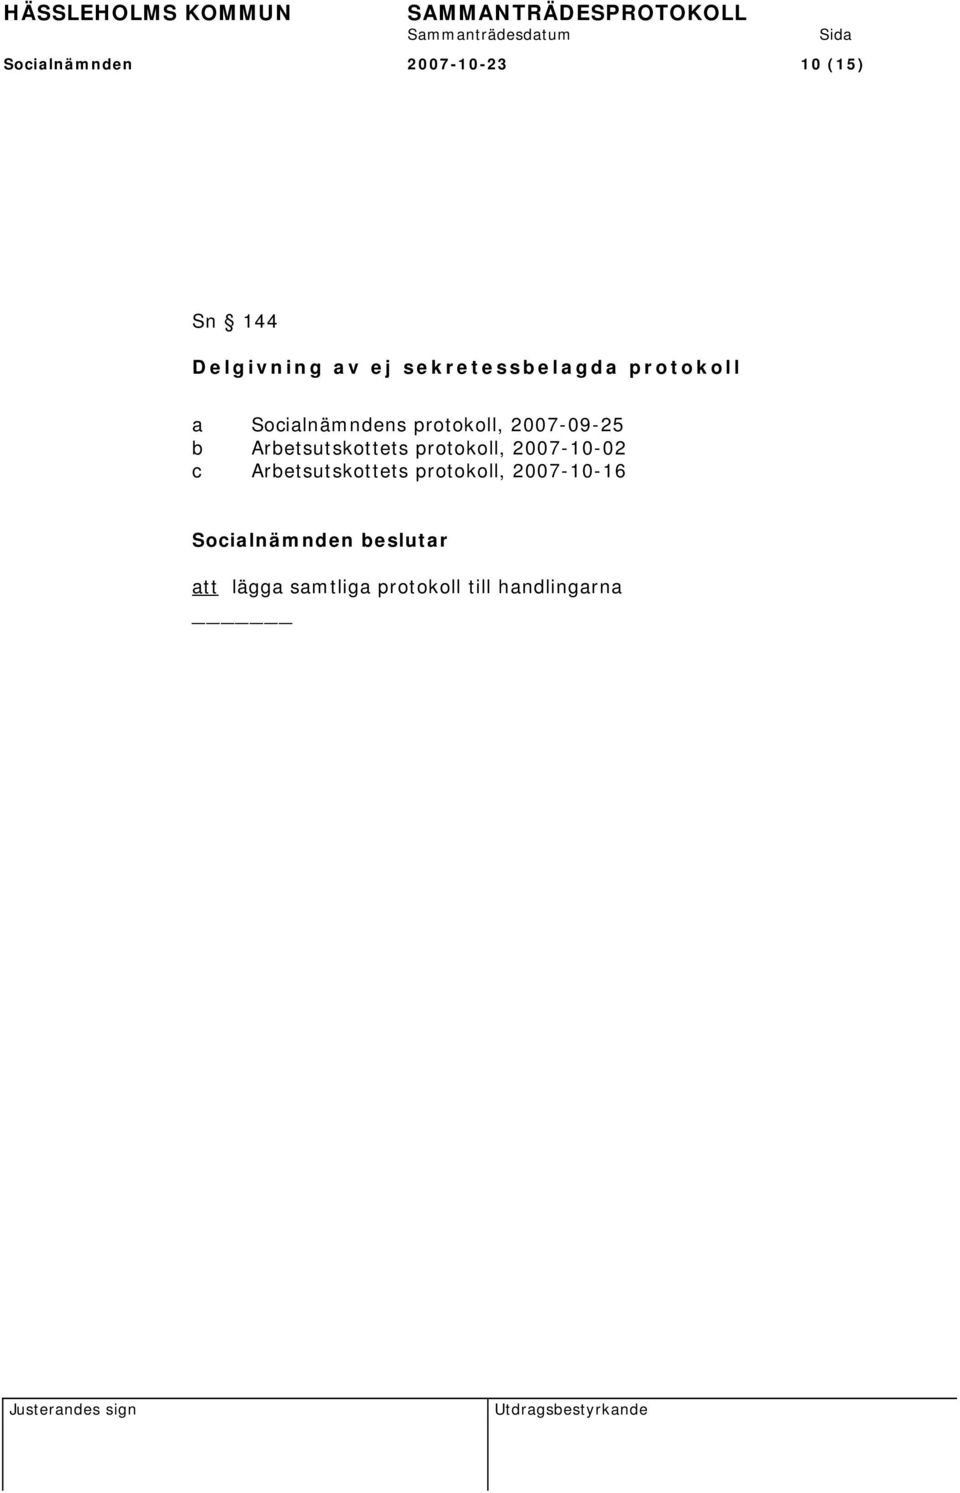 2007-09-25 b Arbetsutskottets protokoll, 2007-10-02 c